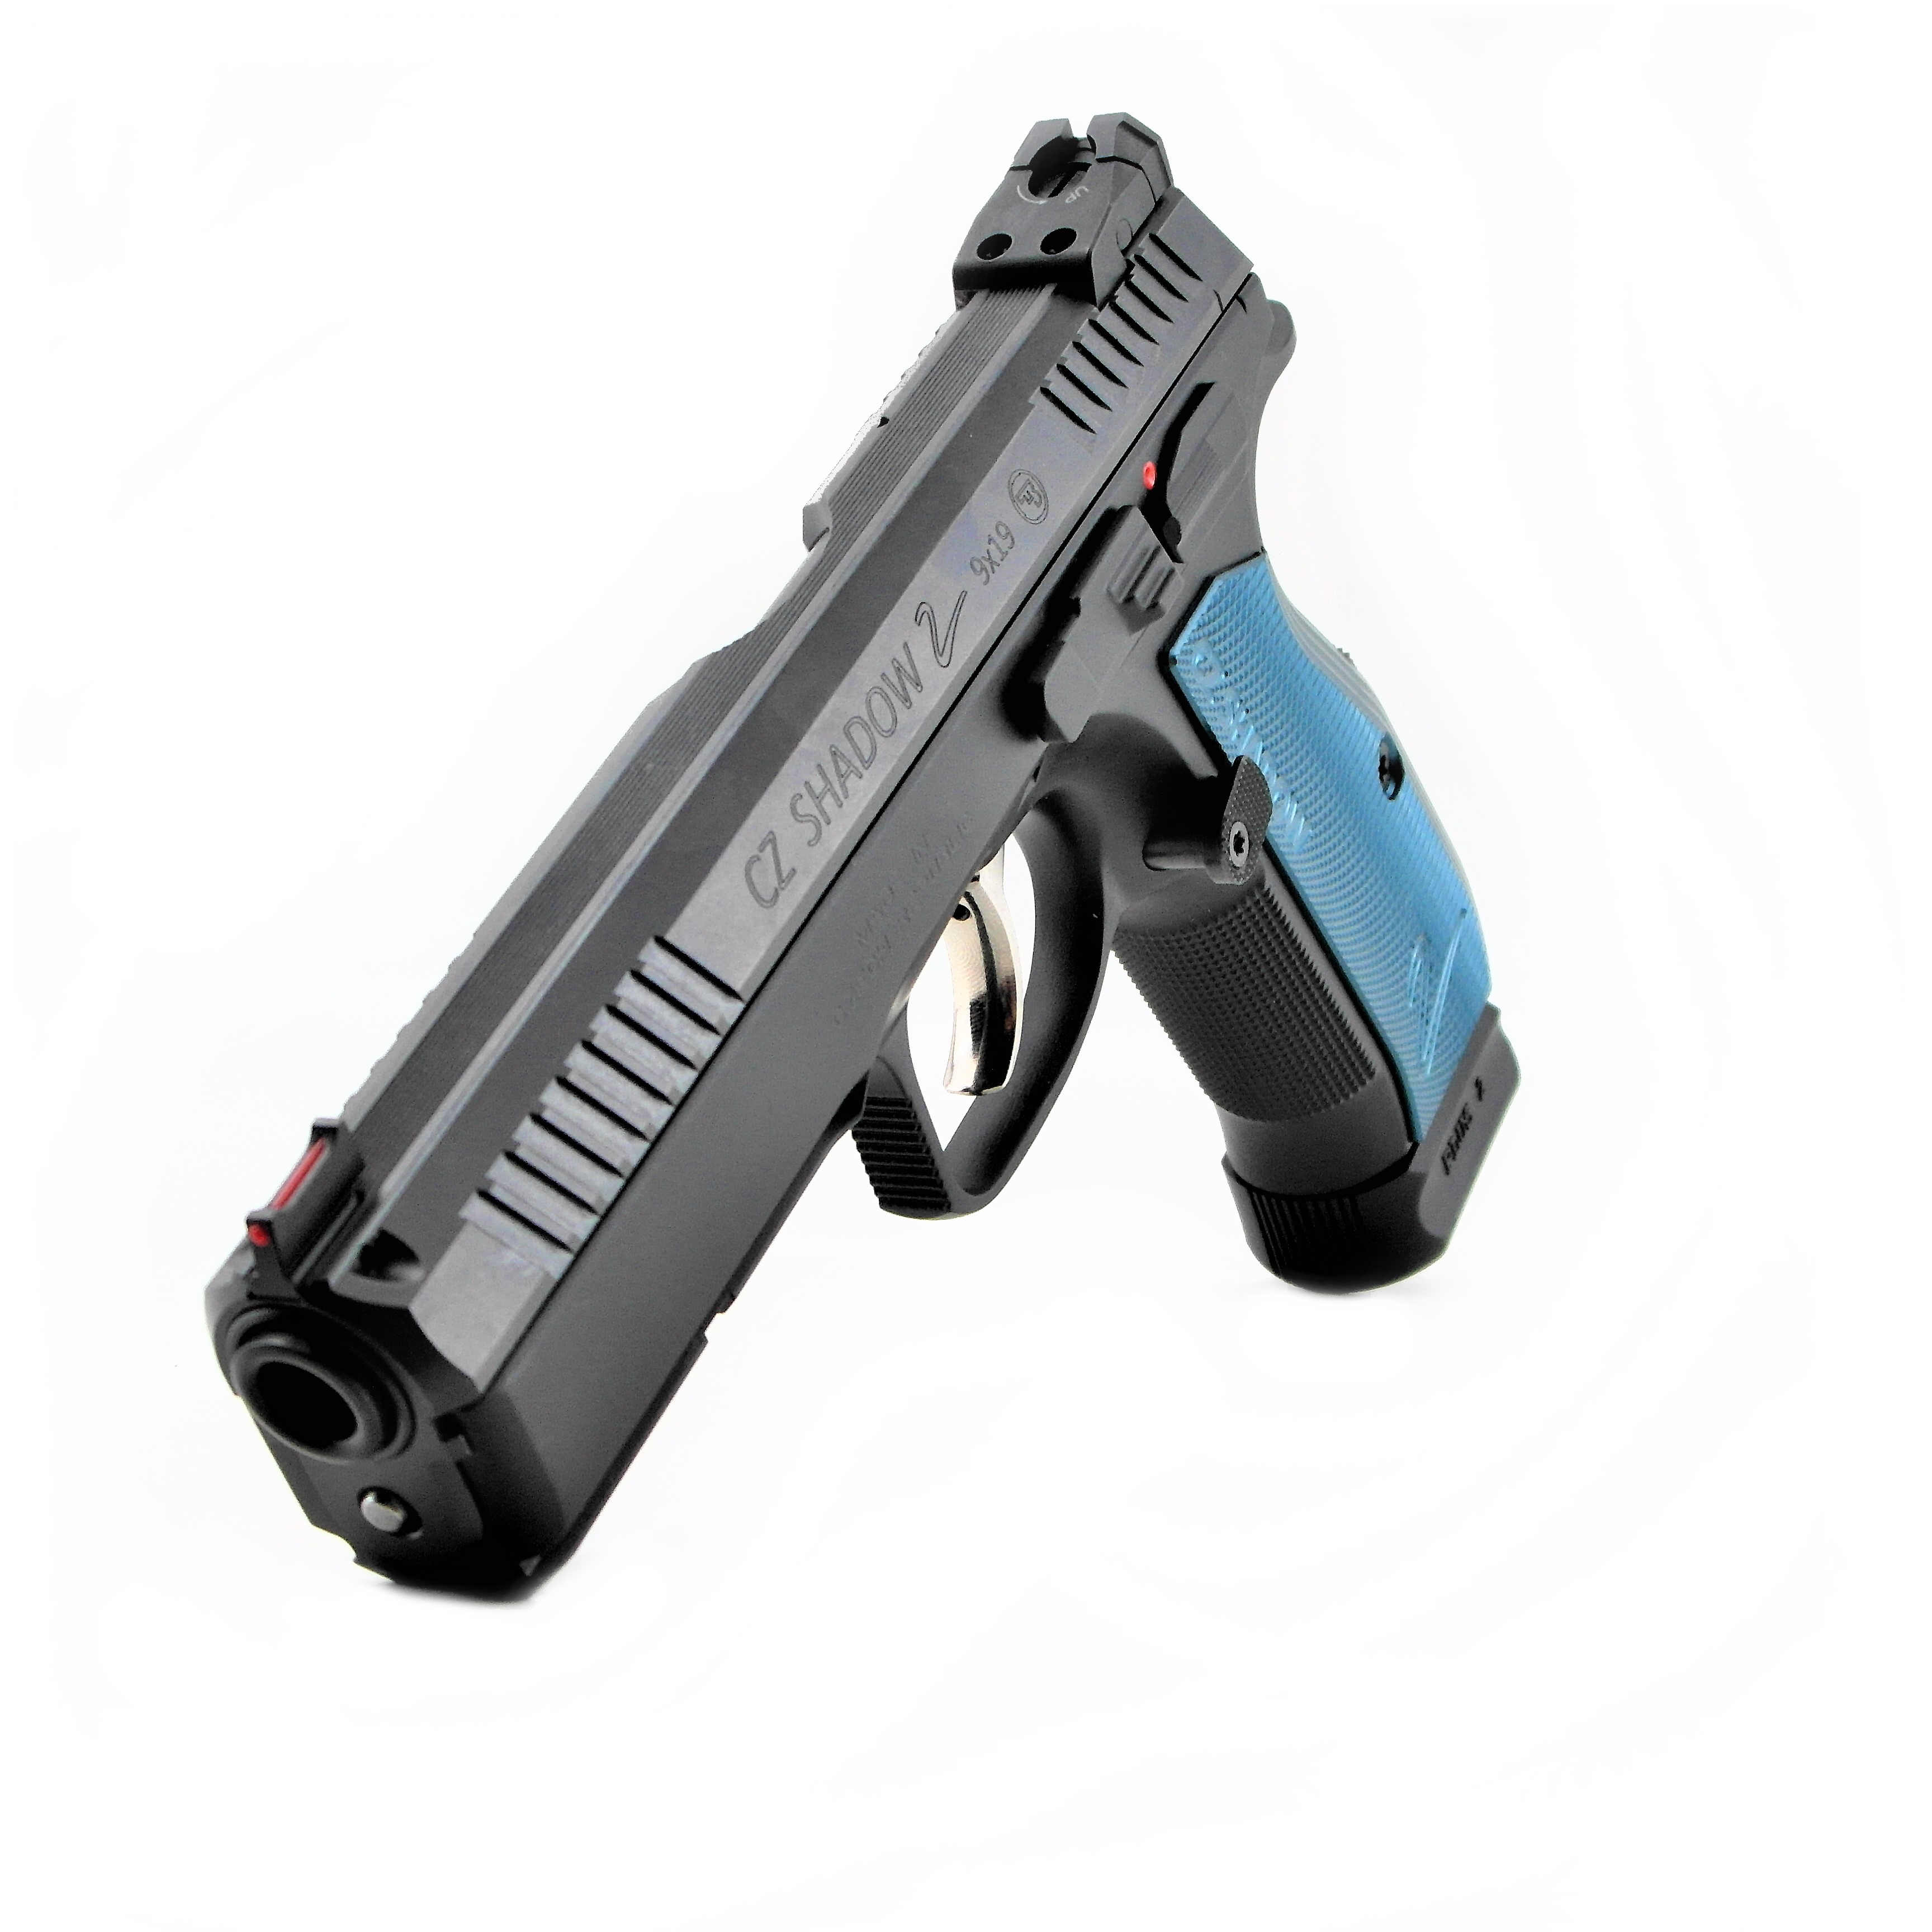 Pistole CZ Shadow 2 im Kaliber 9mm Luger | F.A.S.T. Onlineshop